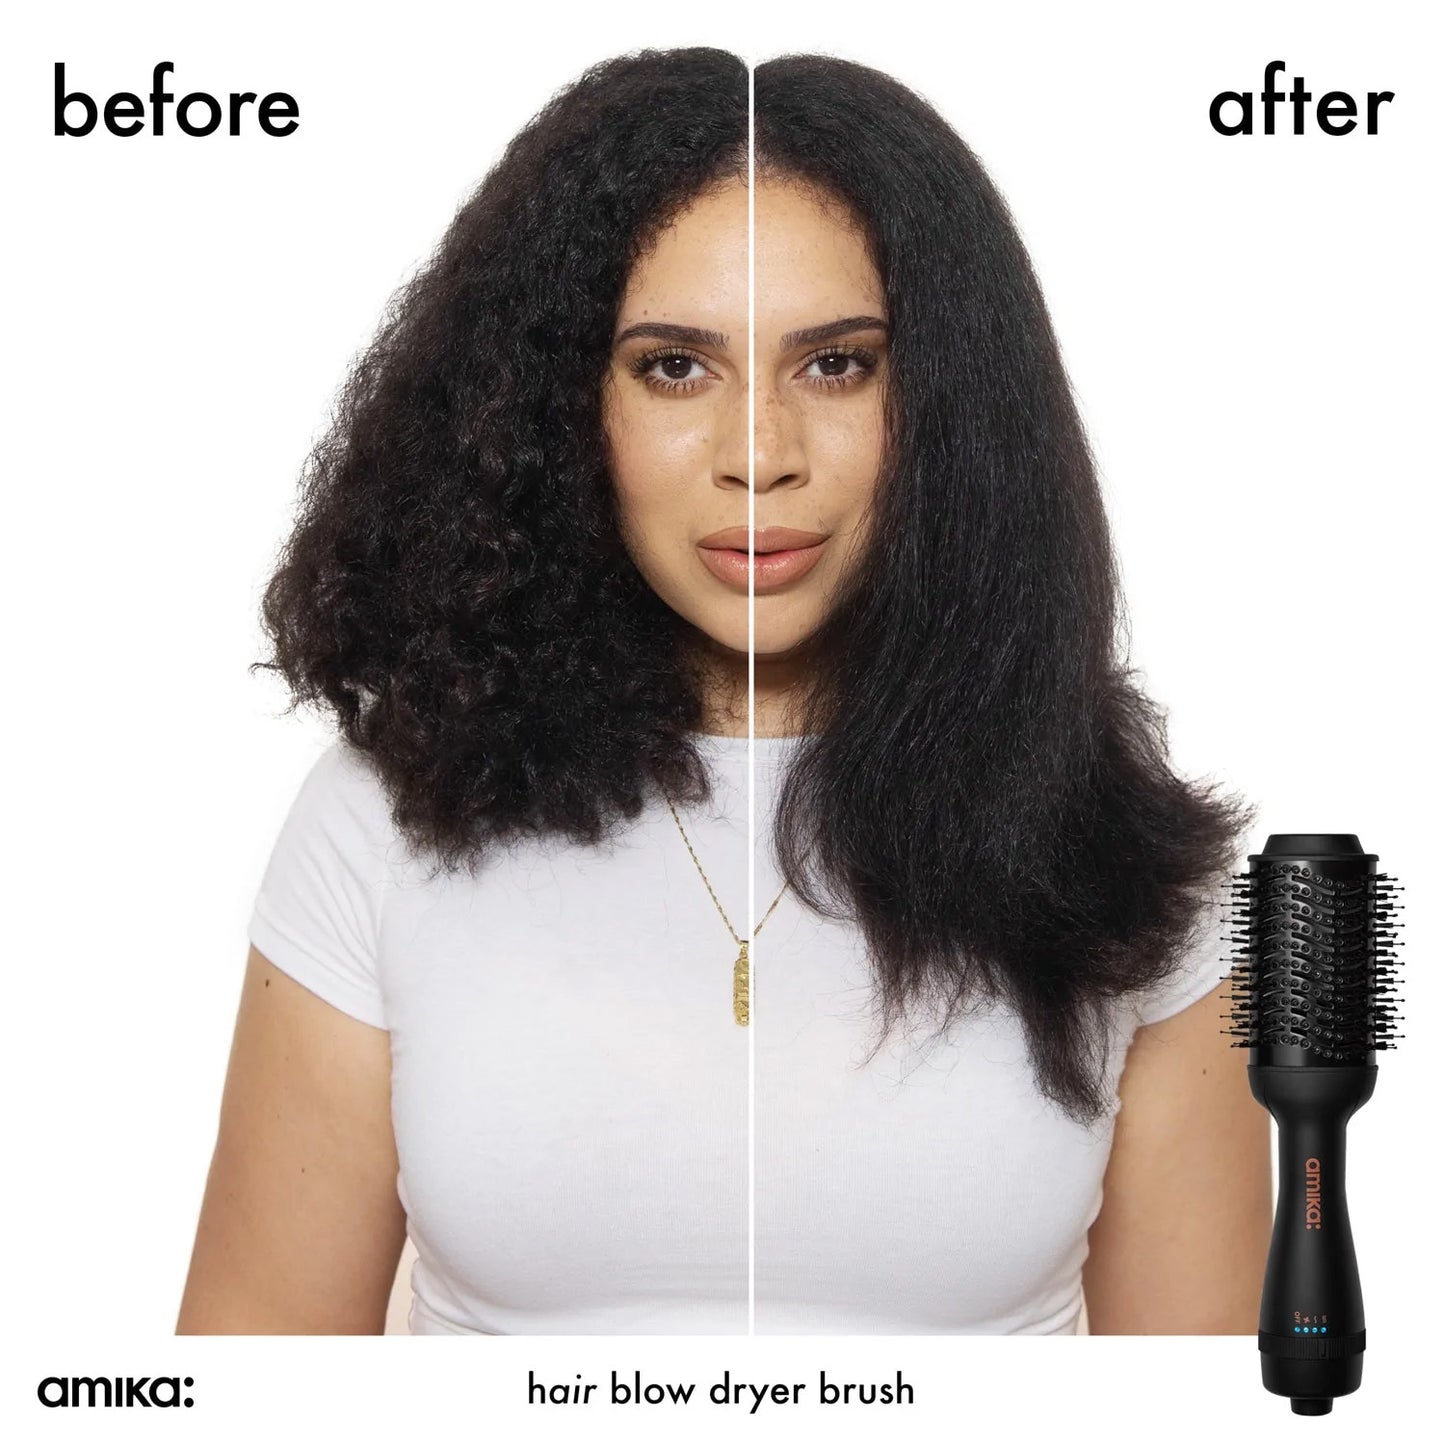 The Hair Blow Dryer Brush